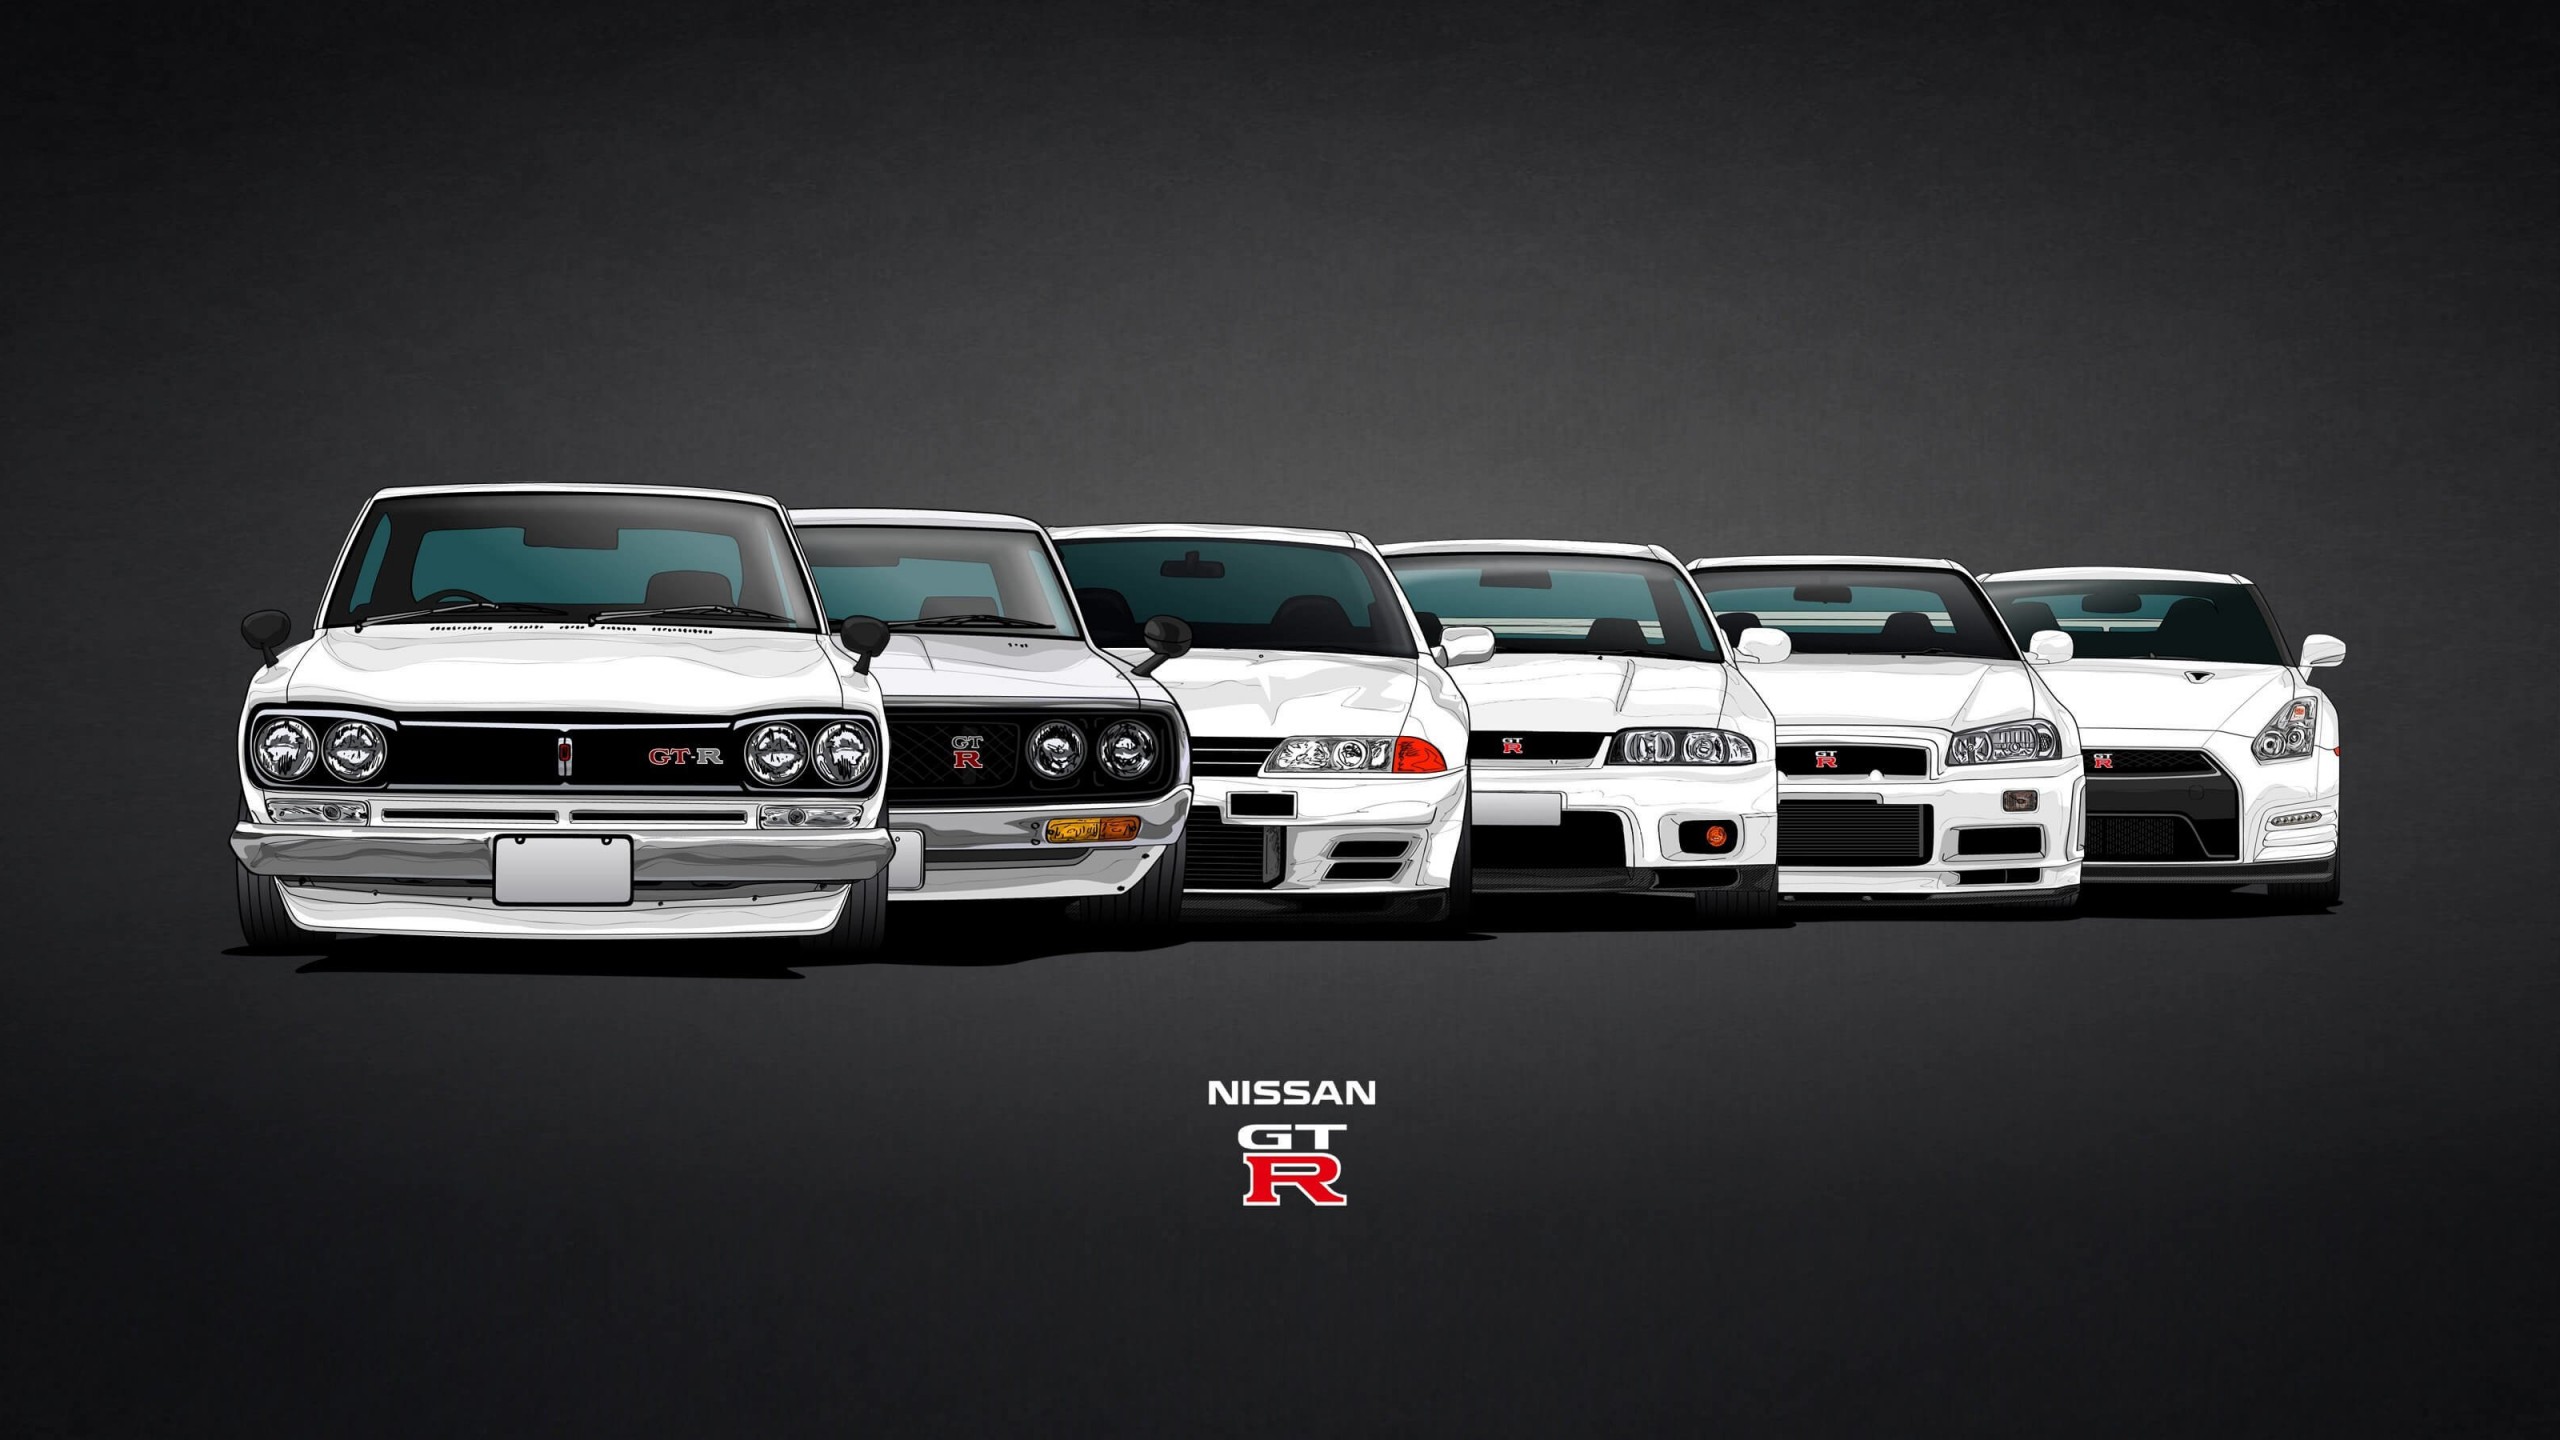 Nissan Skyline GT-R Evolution Wallpaper for Desktop 2560x1440